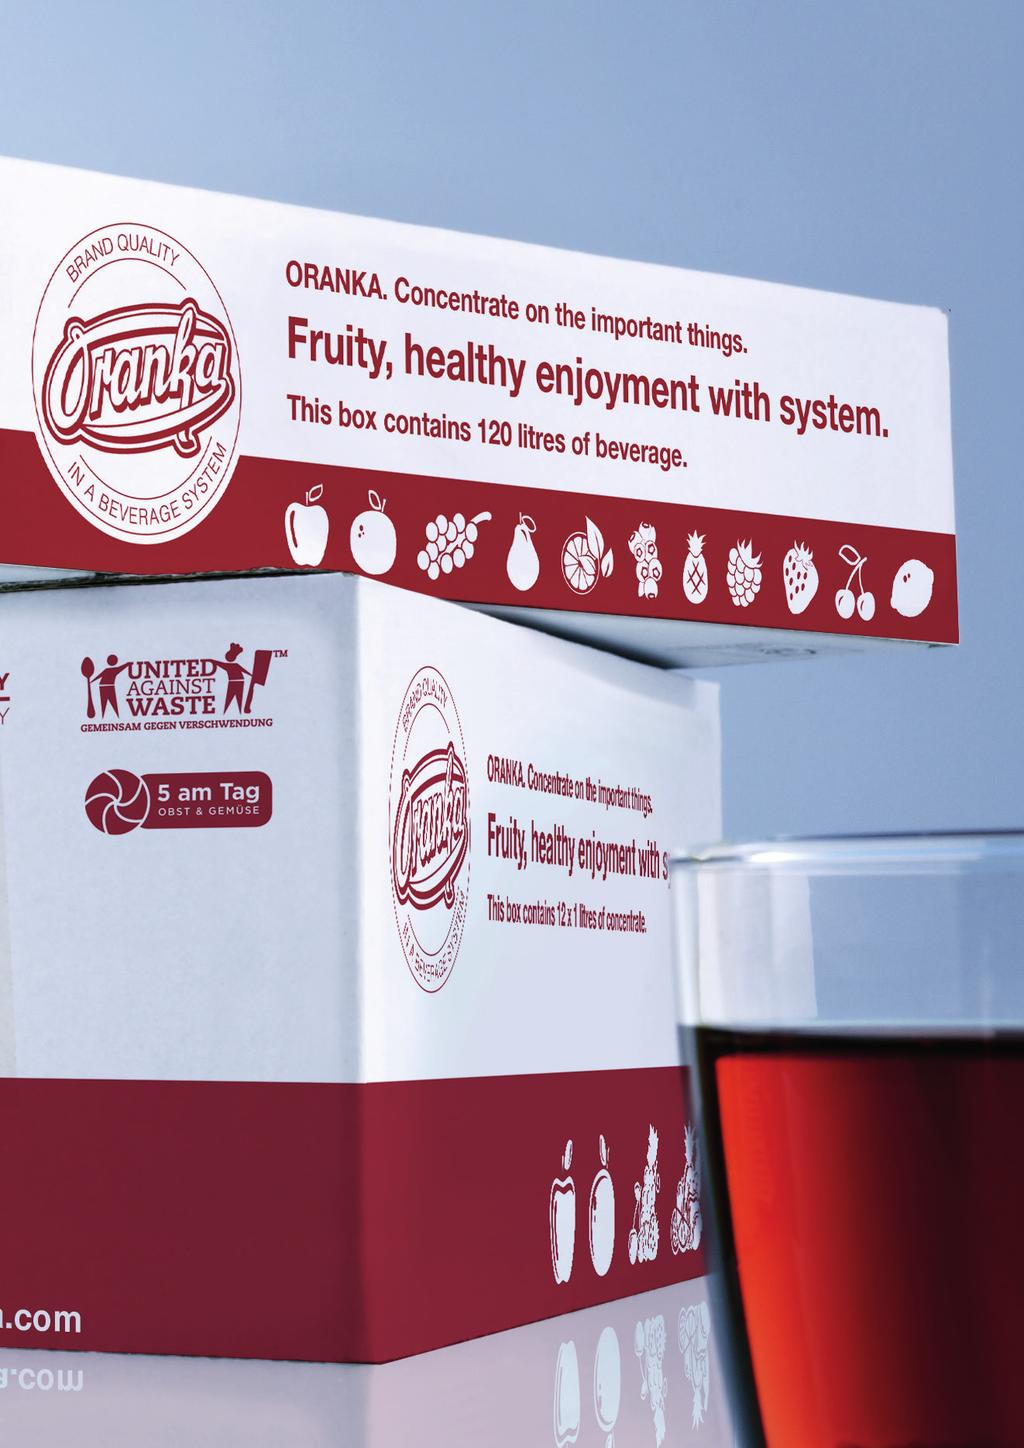 ORANKA Dispenser. The patented beverage system.